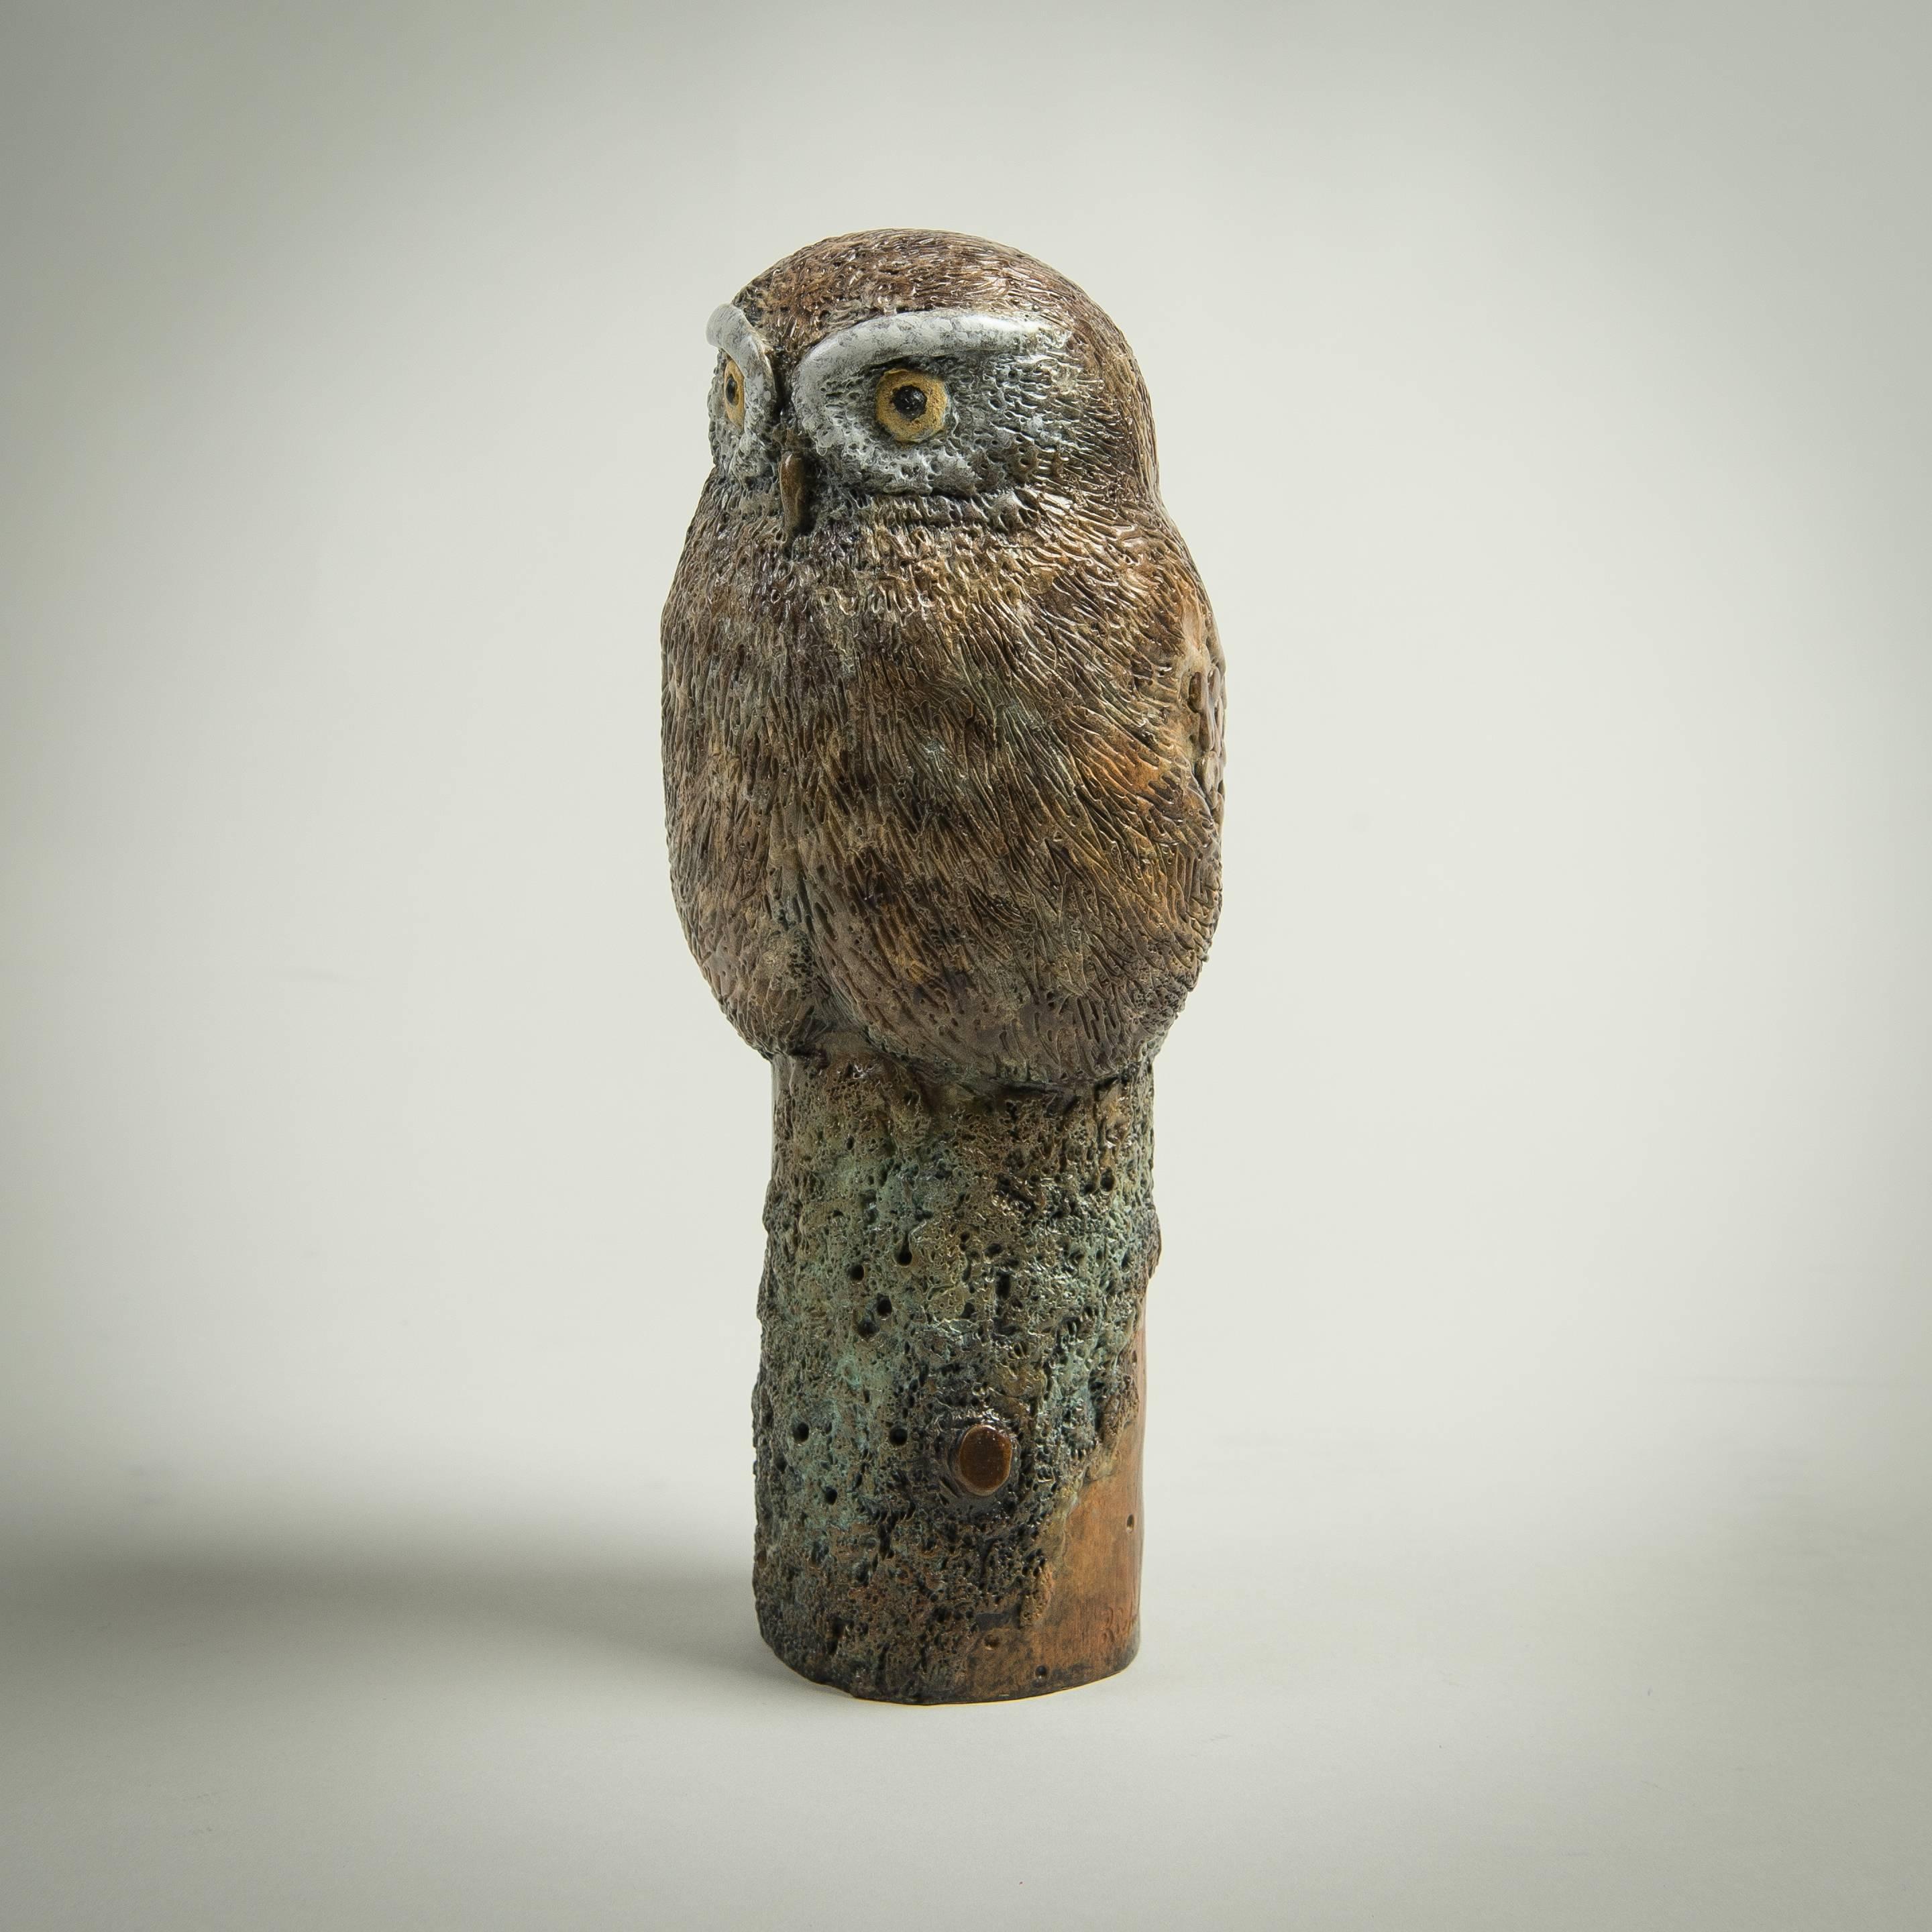 Richard Smith b.1955 Still-Life Sculpture - Contemporary Solid Bronze Wildlife Sculpture 'Little Owl' by Richard Smith